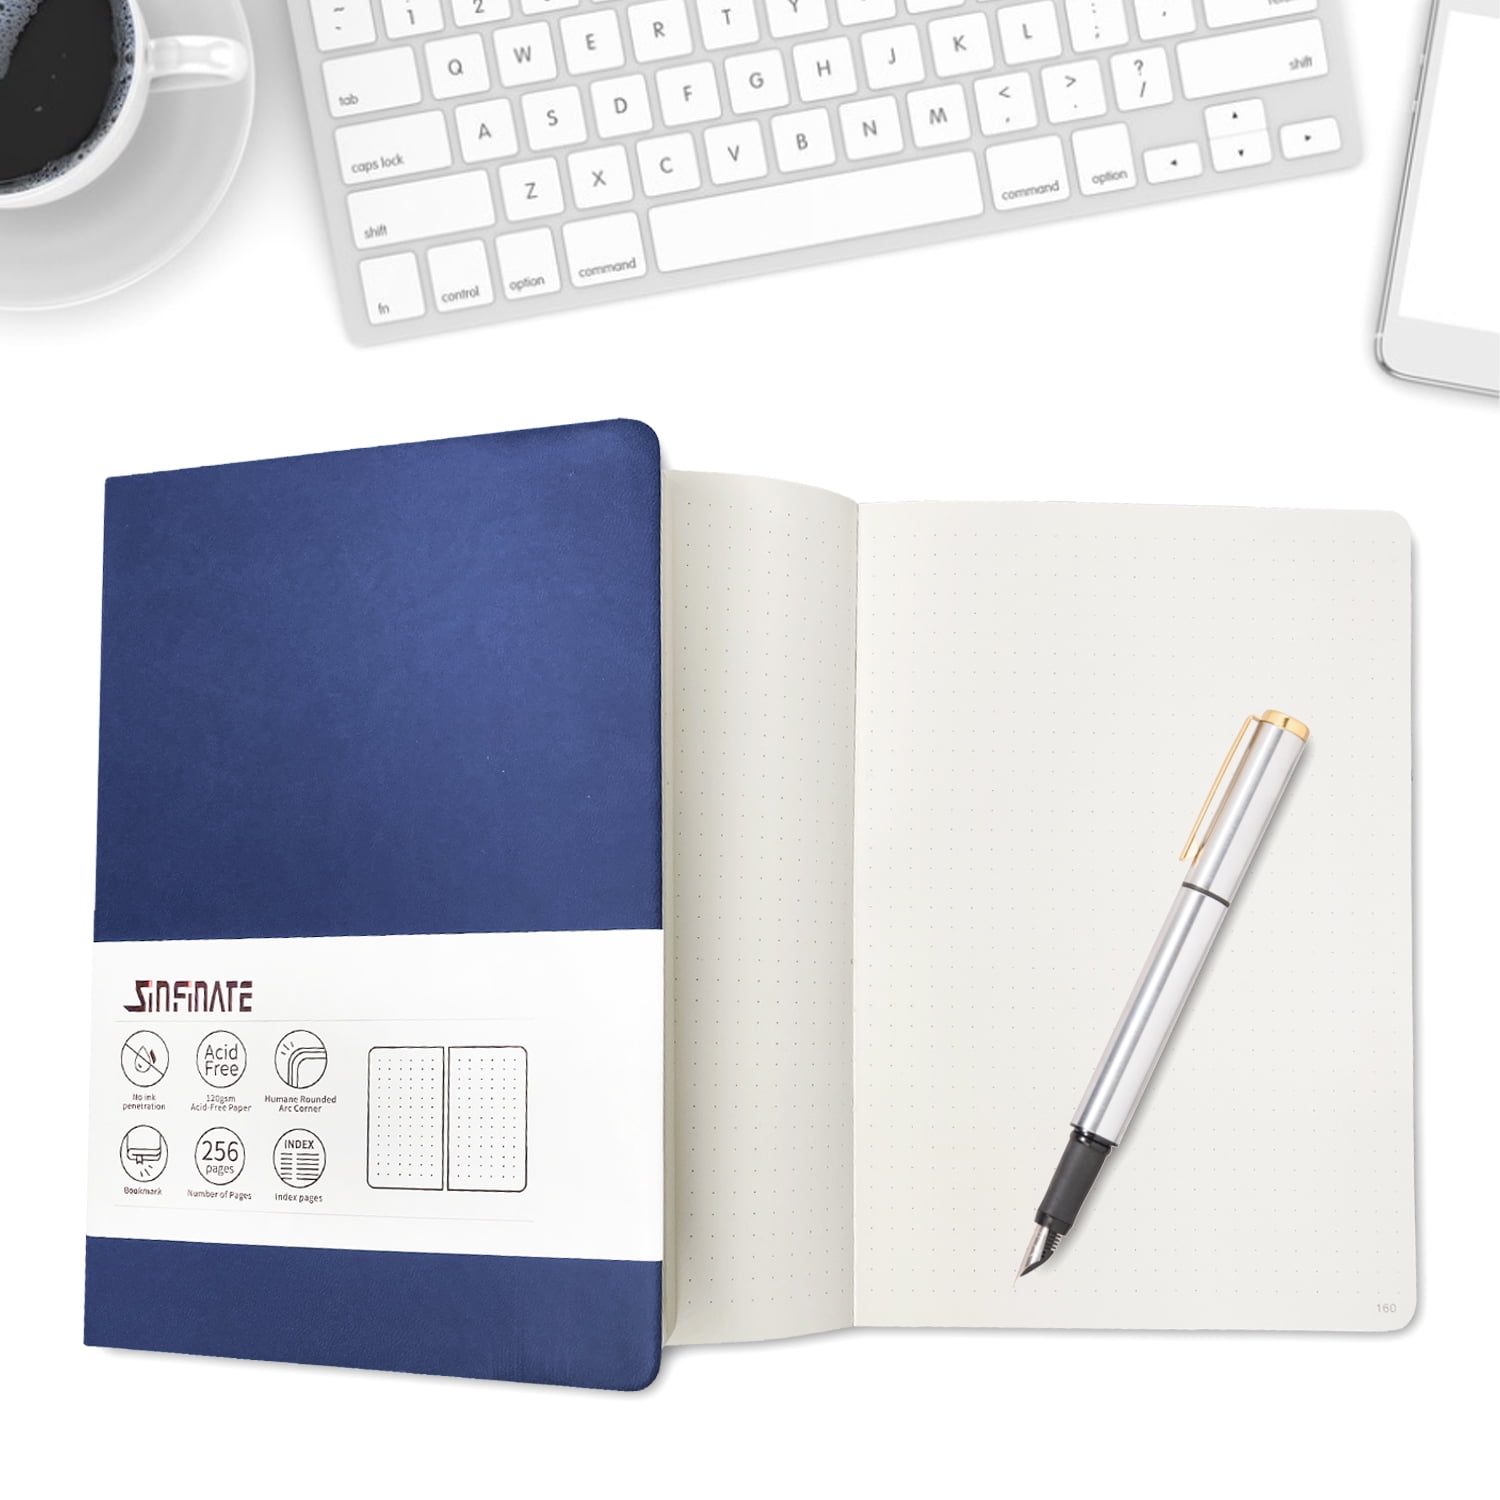 Bullet Dotted Journal - Dot Grid Notebook - 150gsm No Bleed Black